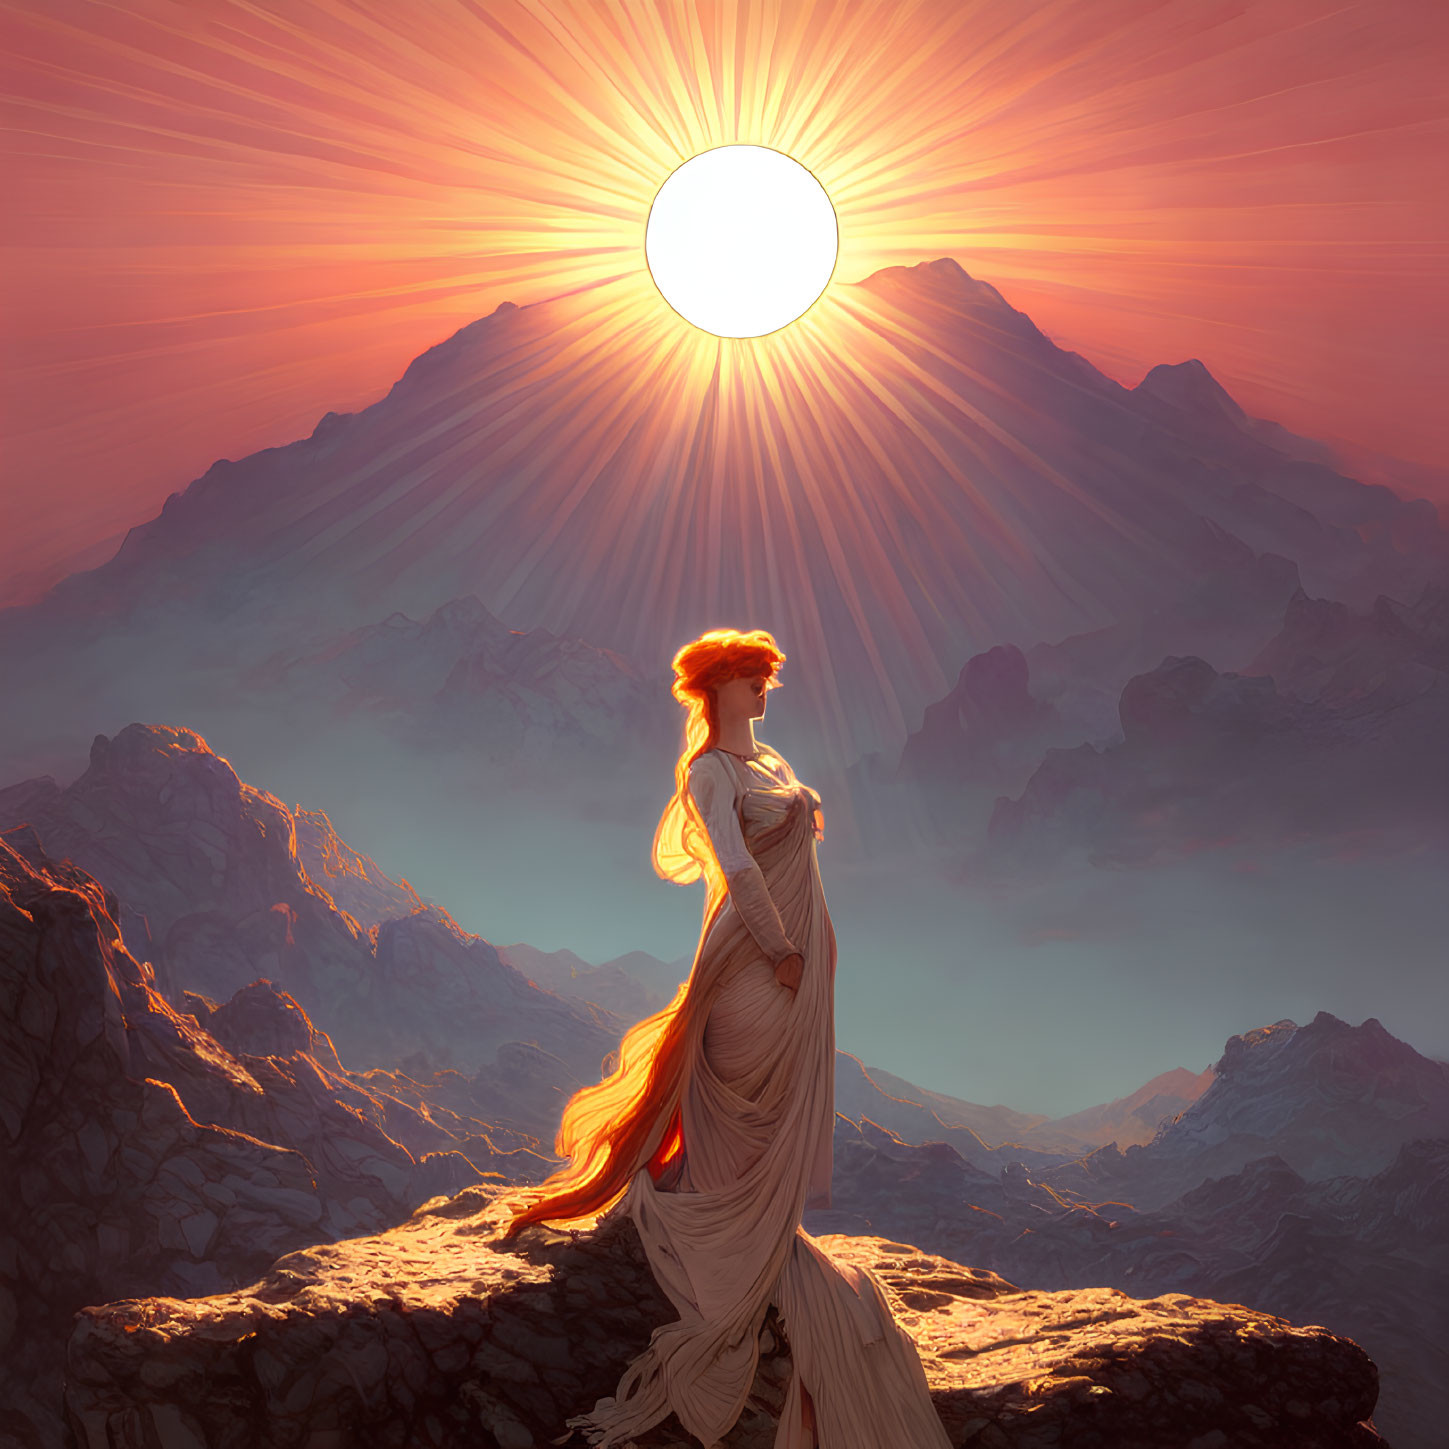 Woman in flowing dress on mountain peak at sunrise